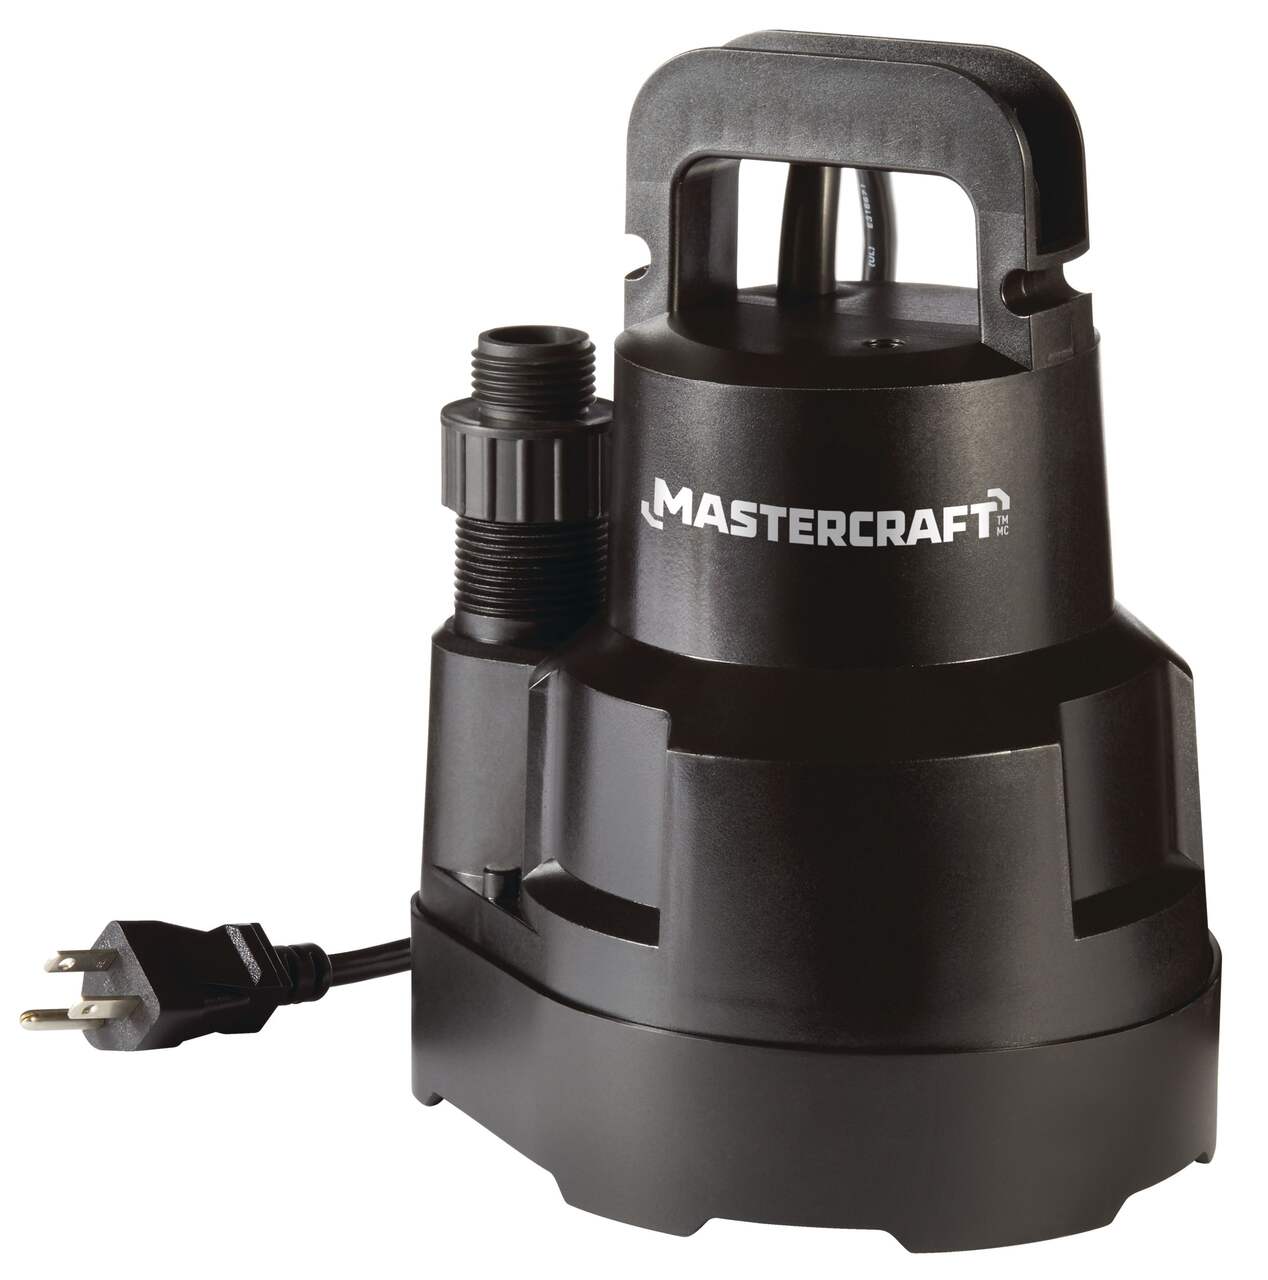 Mastercraft 1/4-HP Electric Dual Function Pump